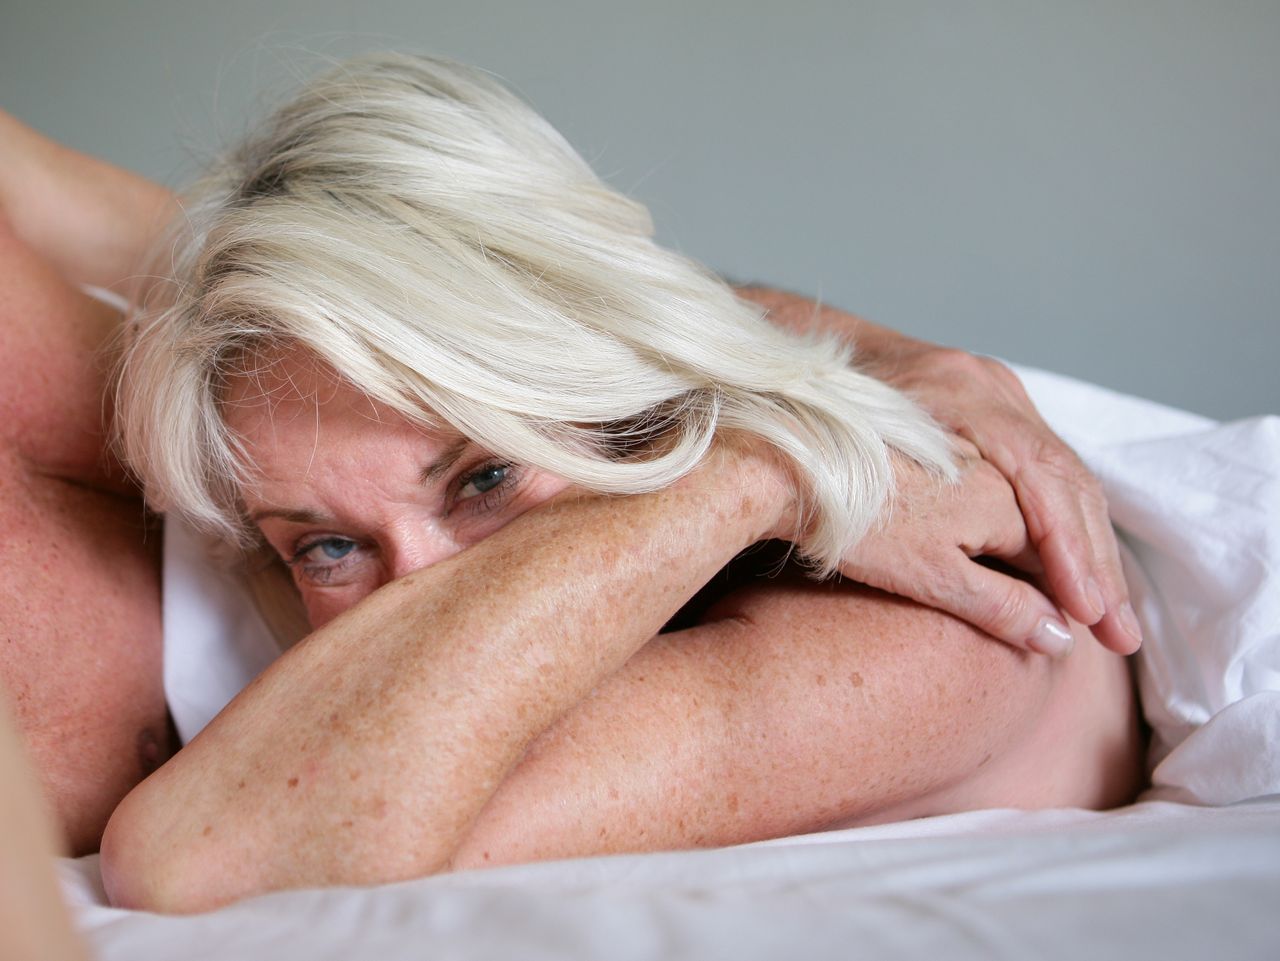 Menopause myths busted: Women enjoy better erotic life post-50